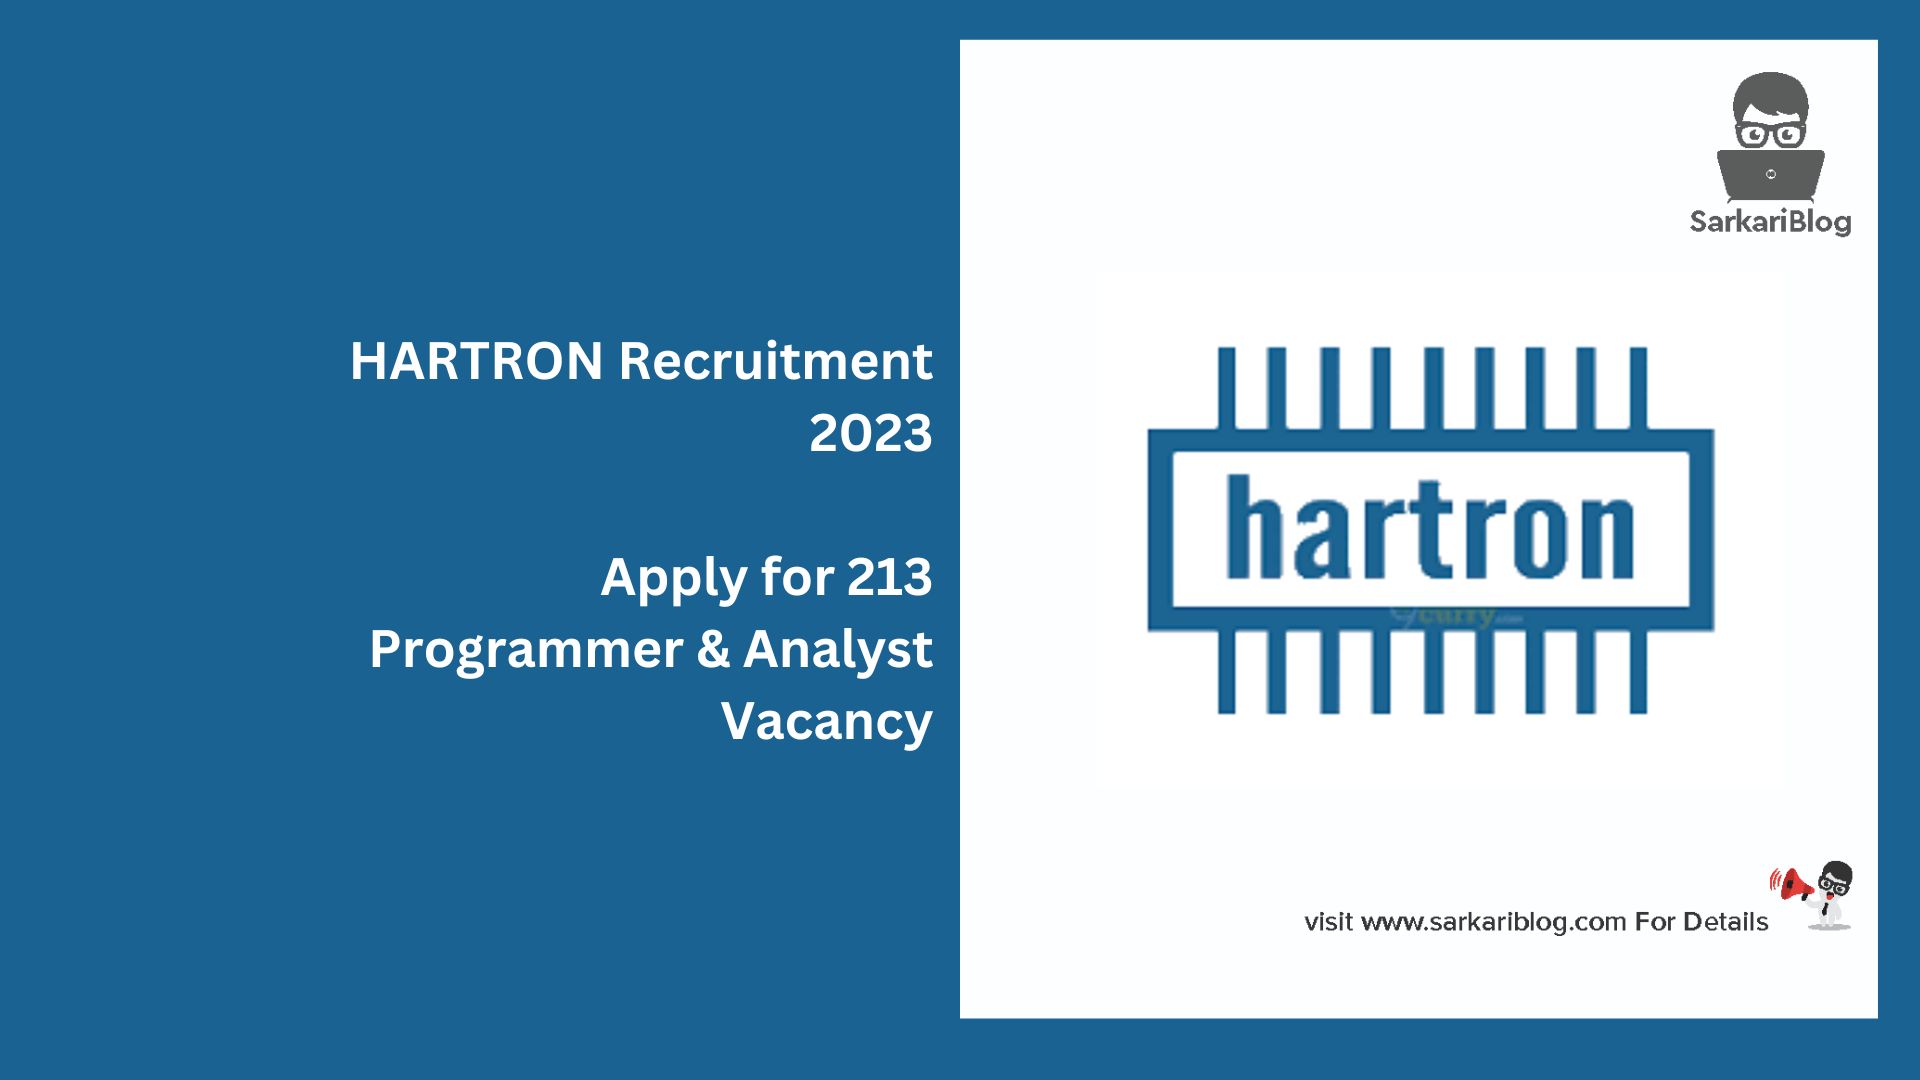 HARTRON Recruitment 2023